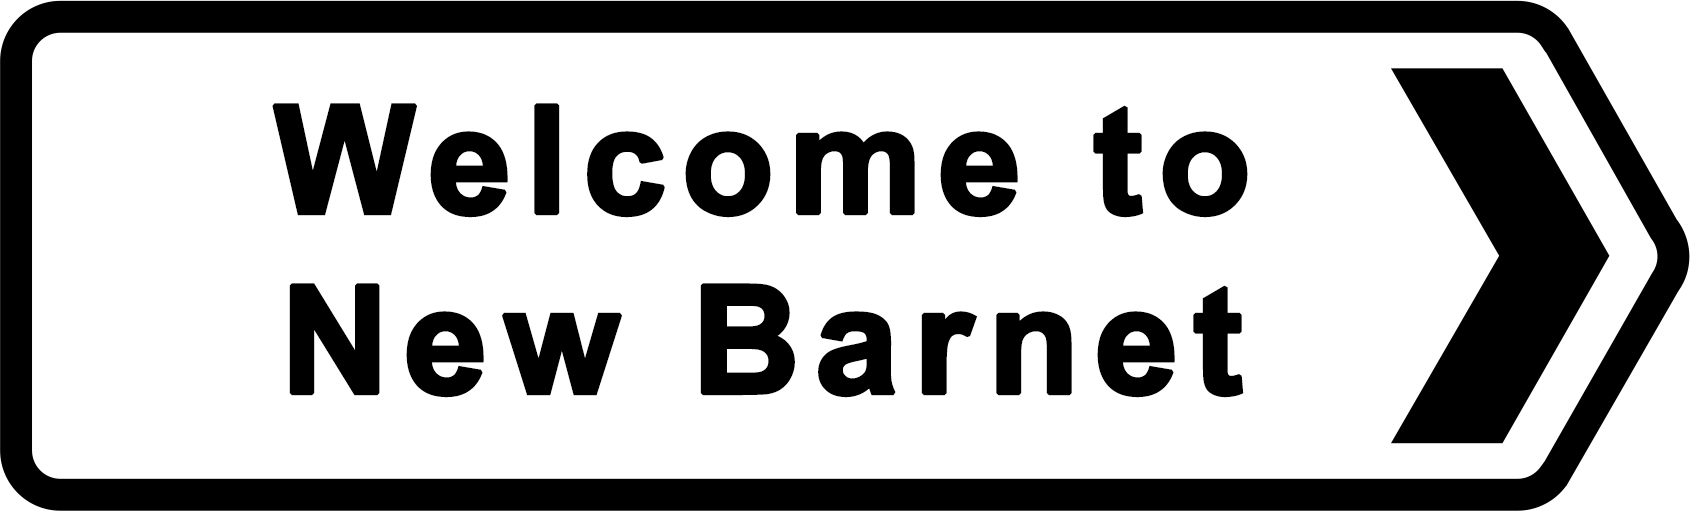 New Barnet railway station - Cheap Driving Schools Lessons in New Barnet,EN4/EN5, London borough of Barnet, Hertfordshire, Greater London